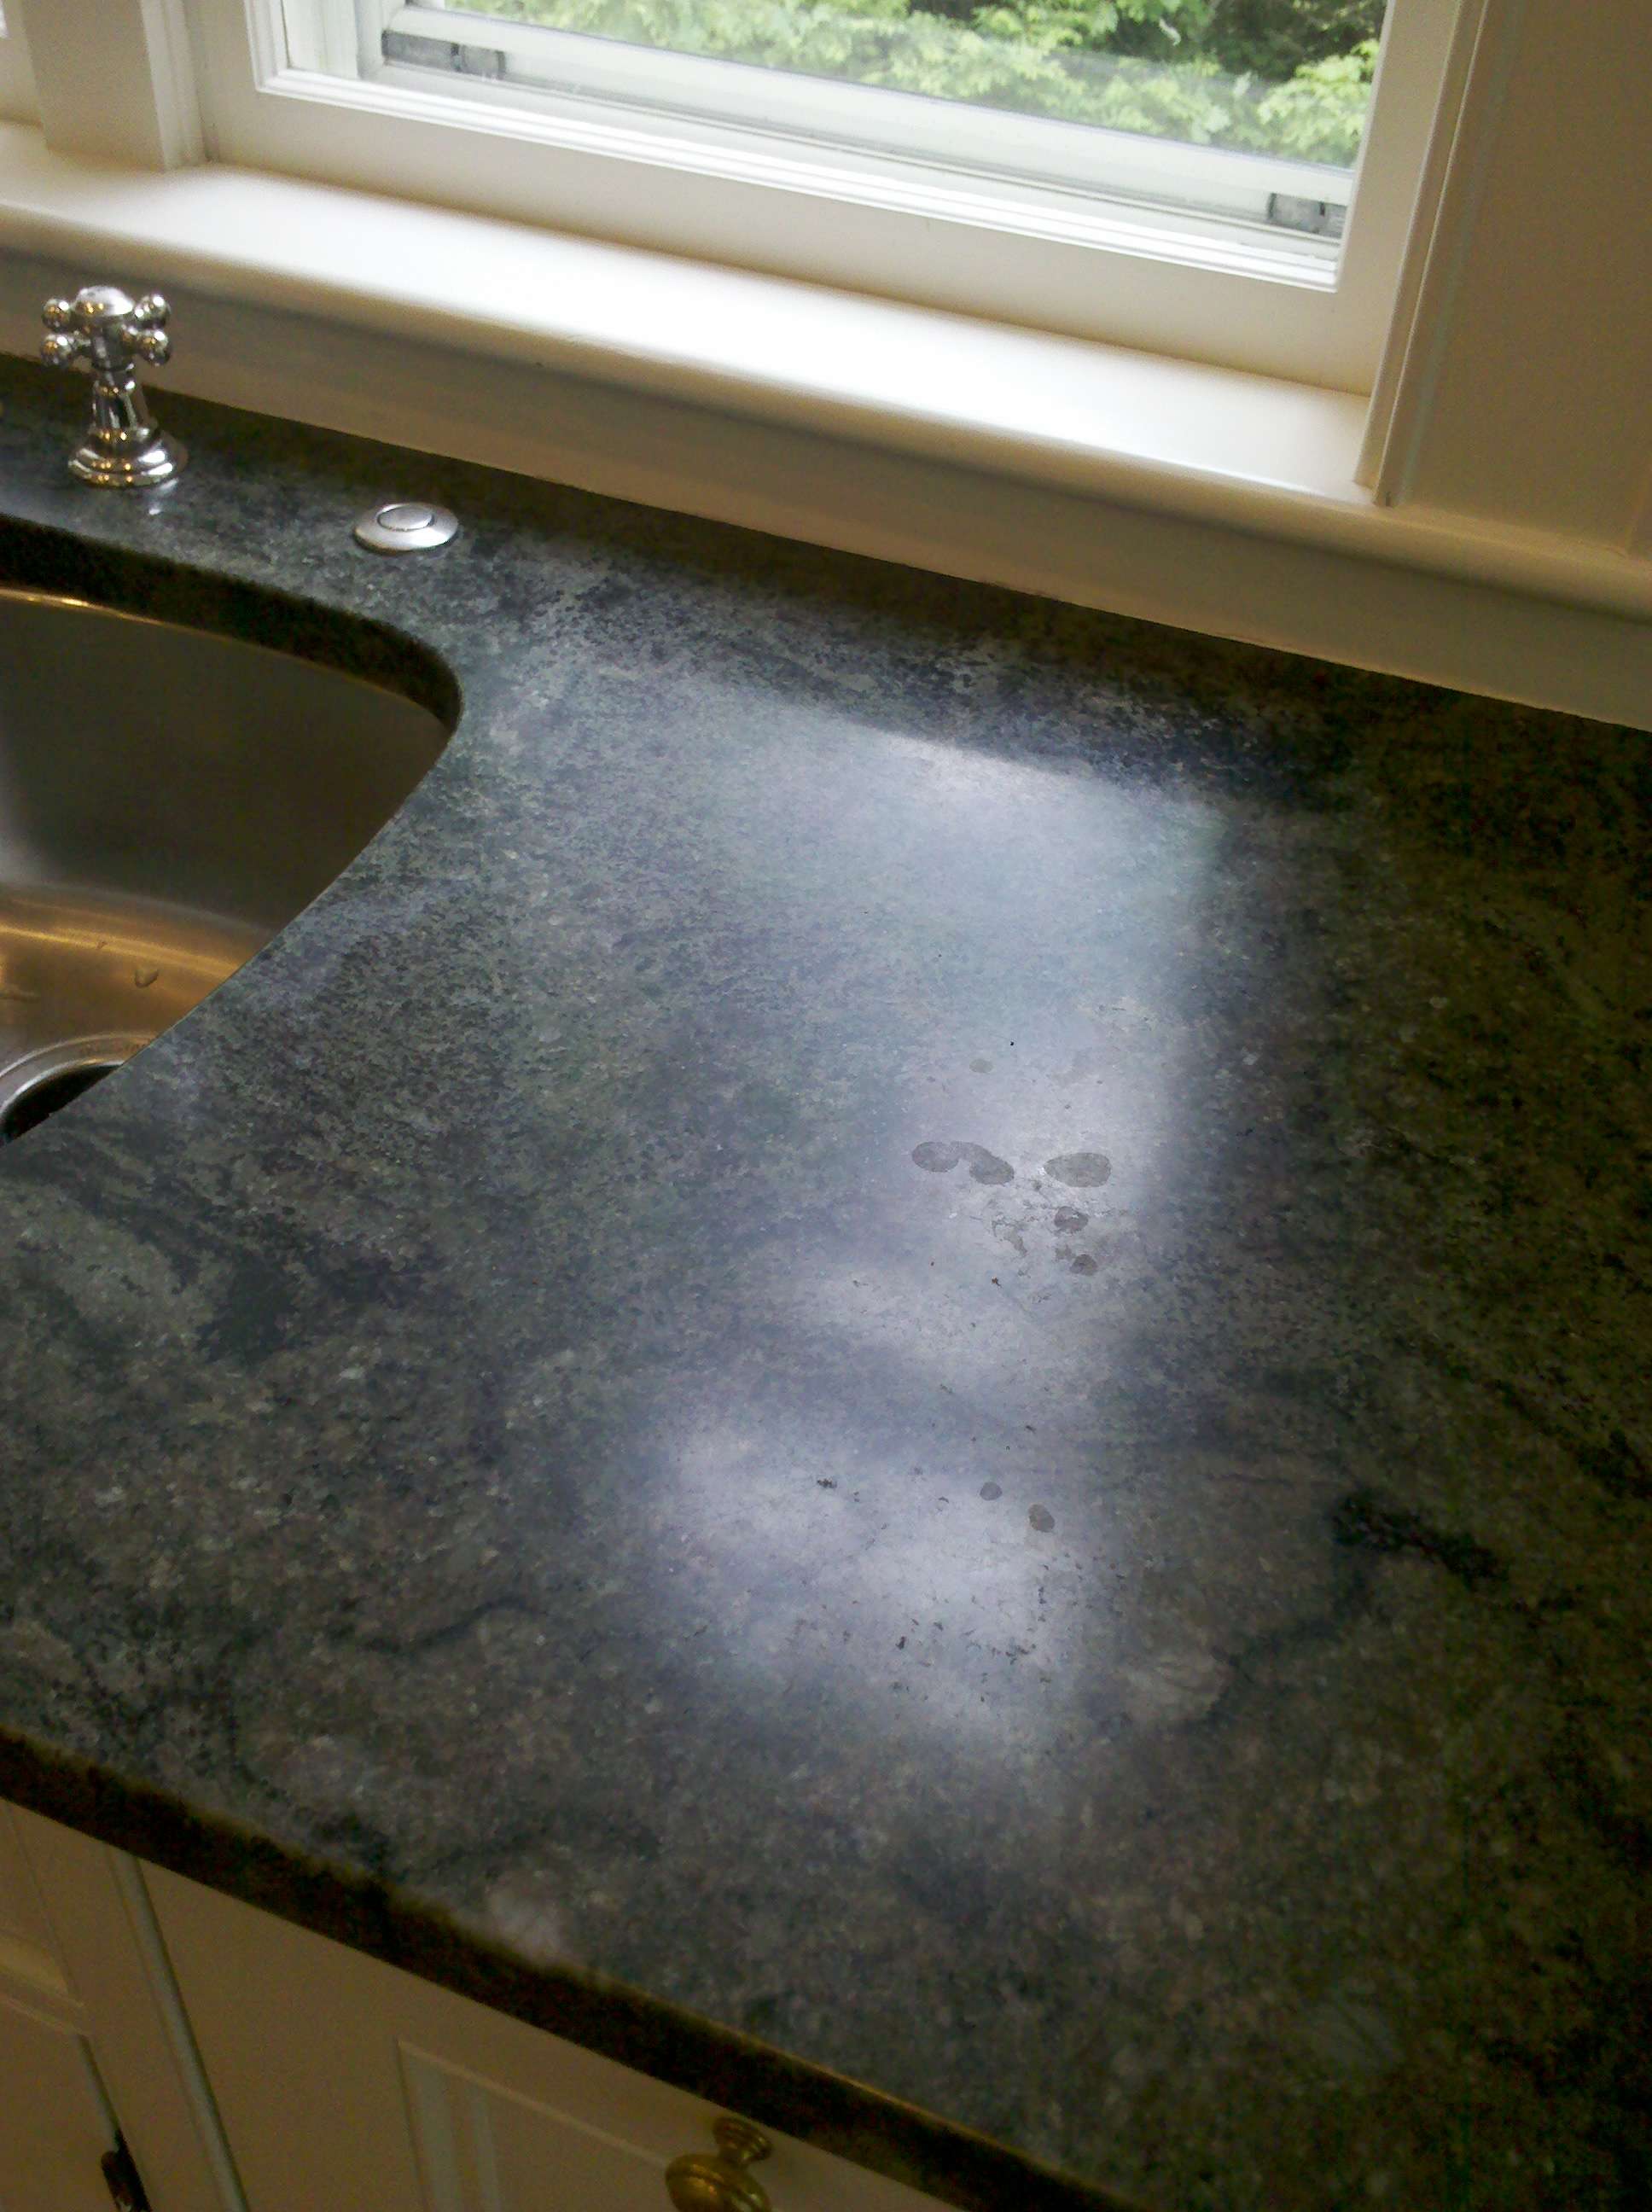 Polishing Granite Countertops Clean, How To Buff And Shine Granite Countertops